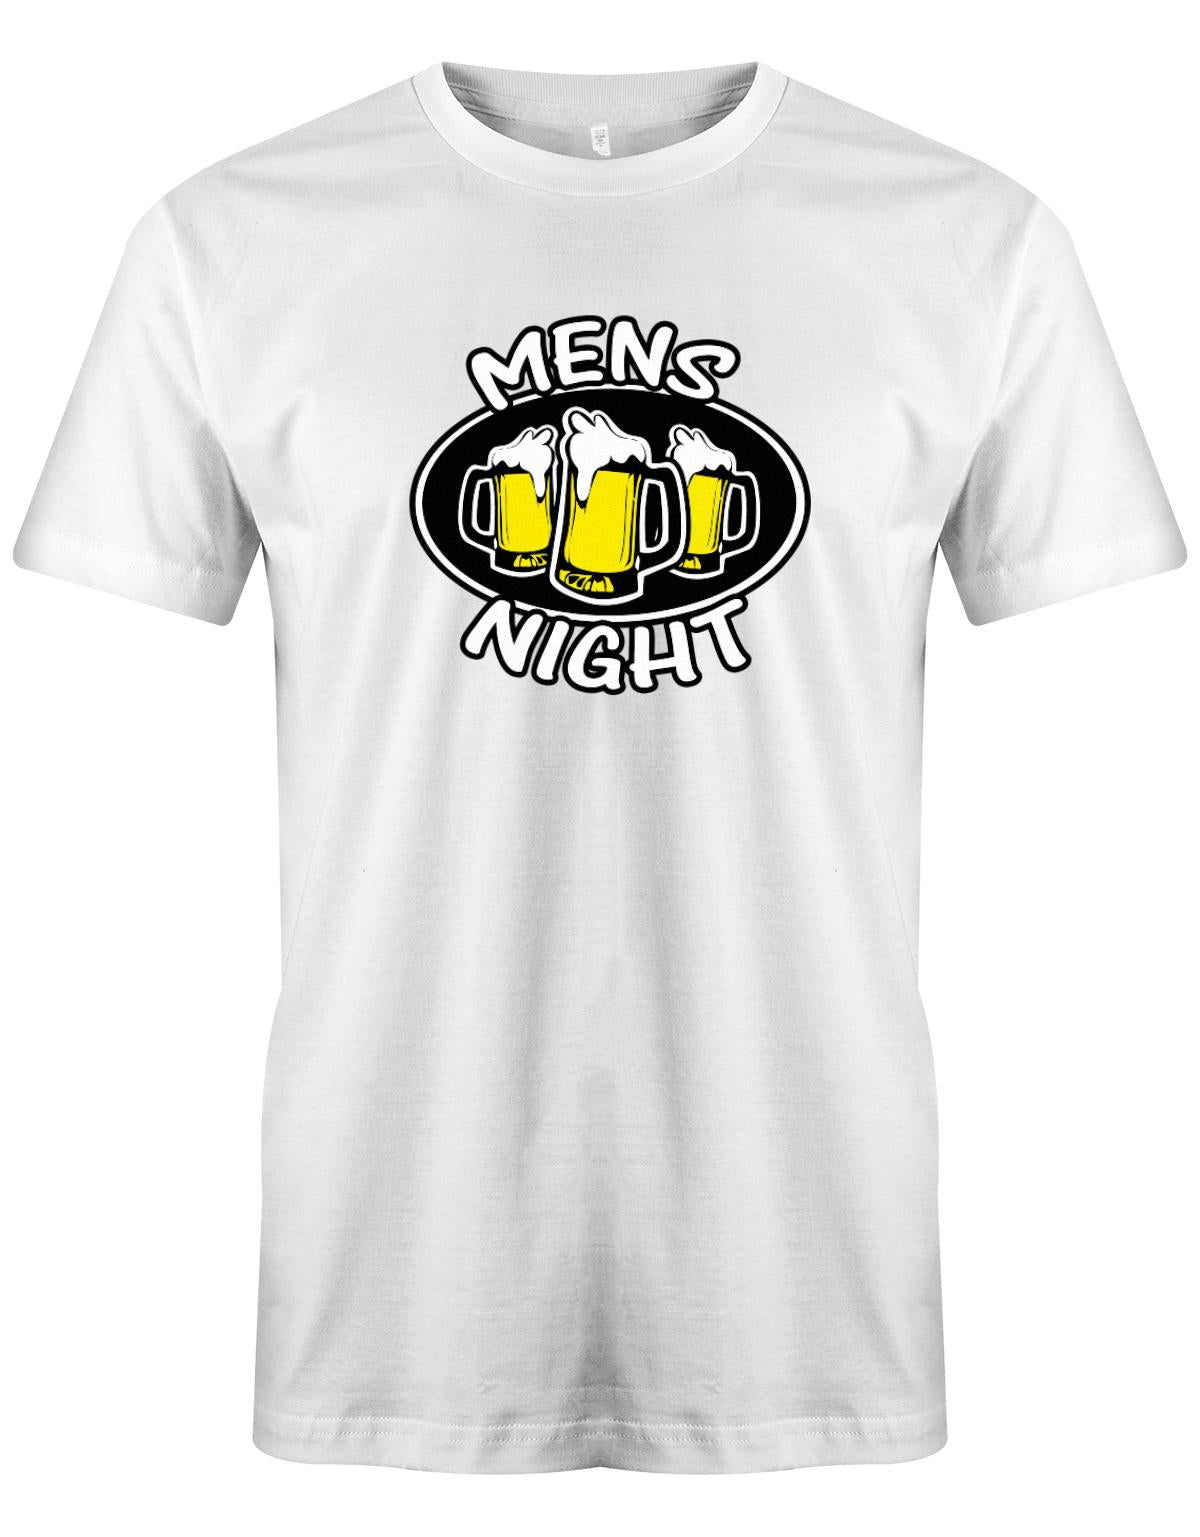 Mens-Night-Bier-Herren-Shirt-Weiss